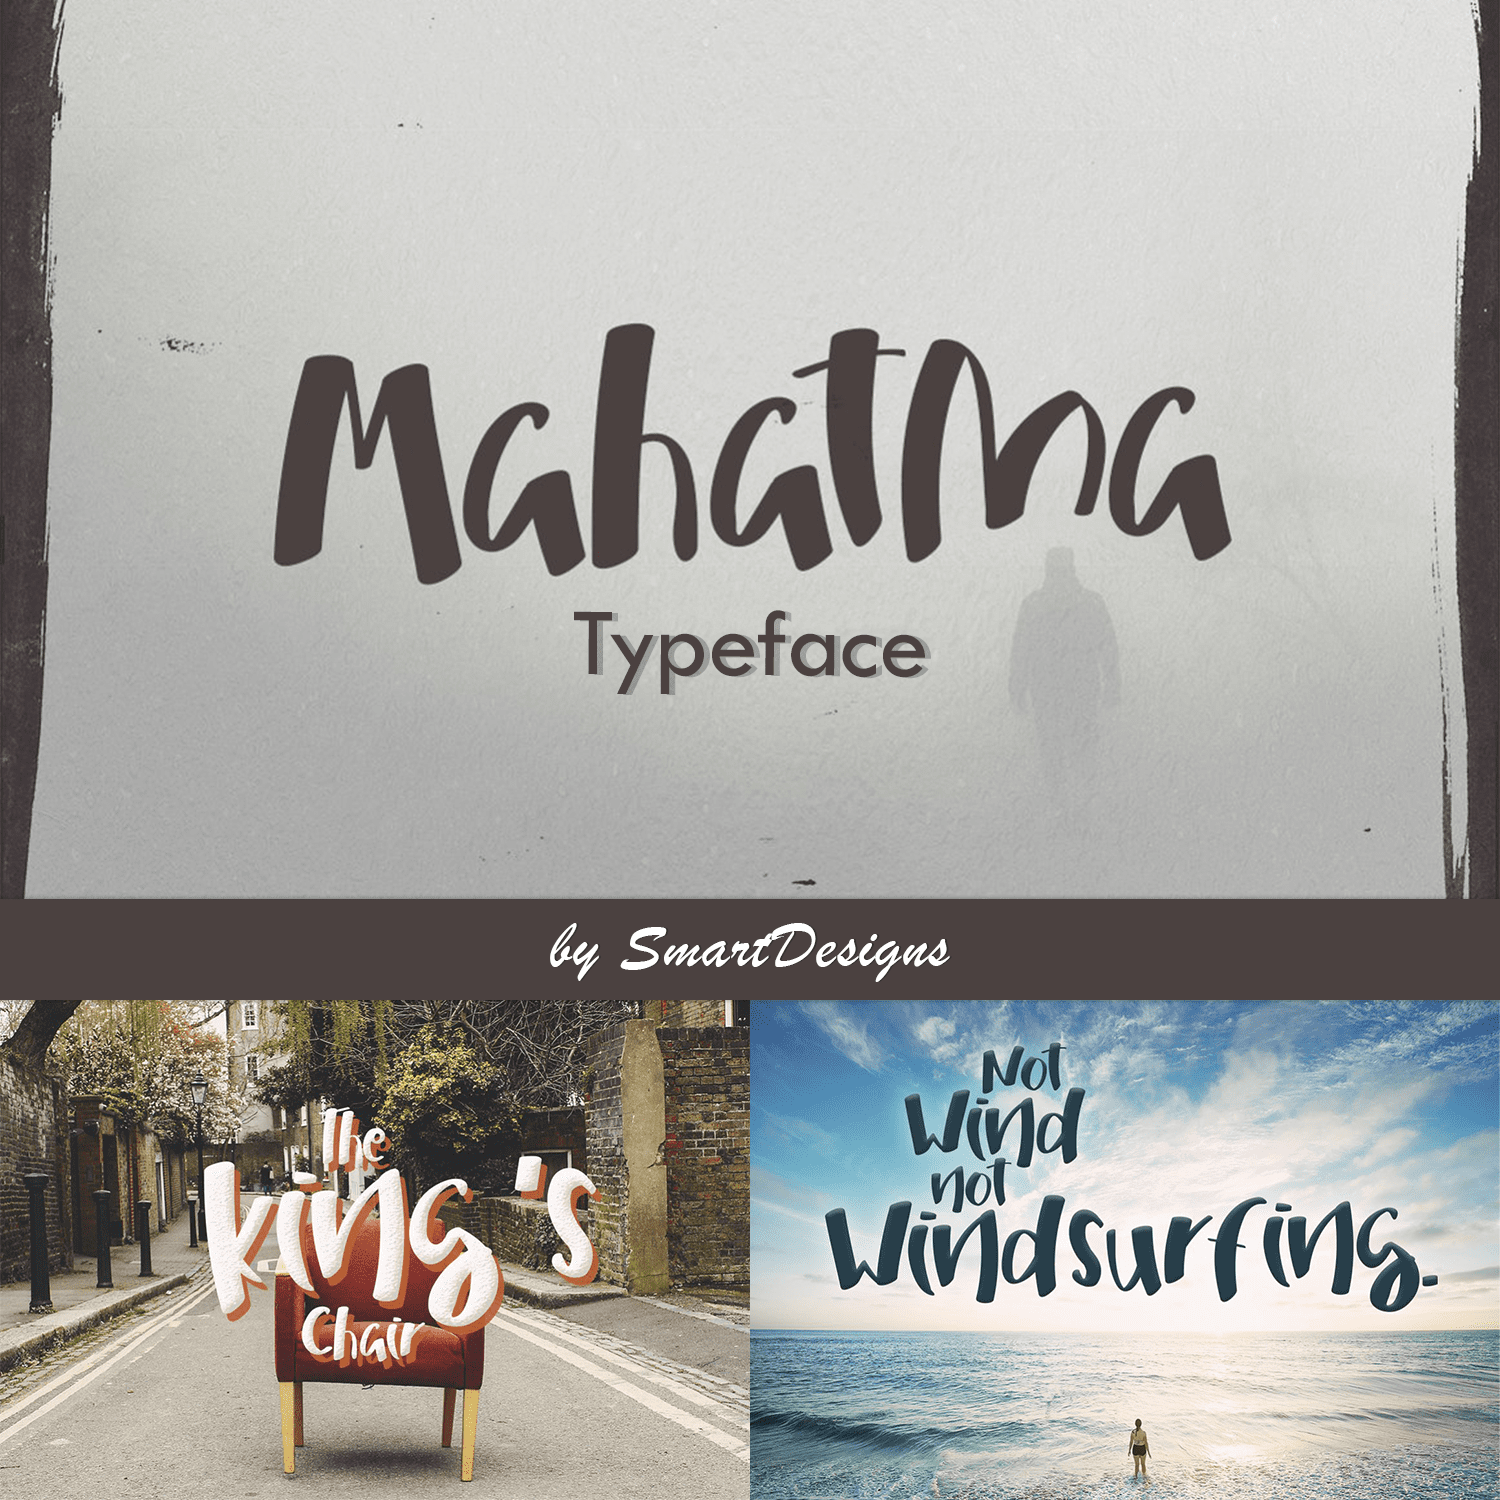 Preview mahatma typeface.